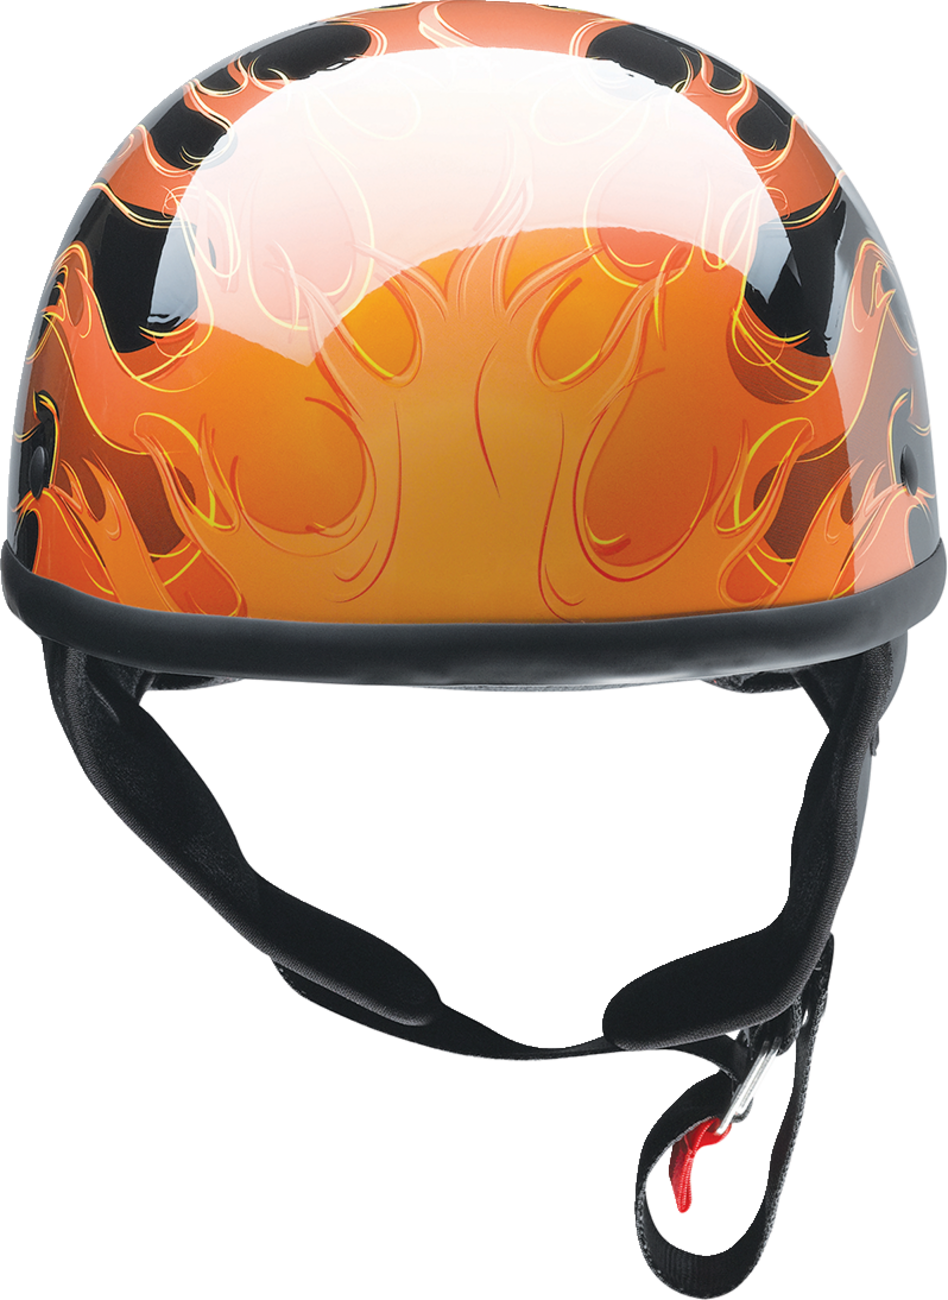 Z1R CC Beanie Helmet - Hellfire - Orange - XL 0103-1349